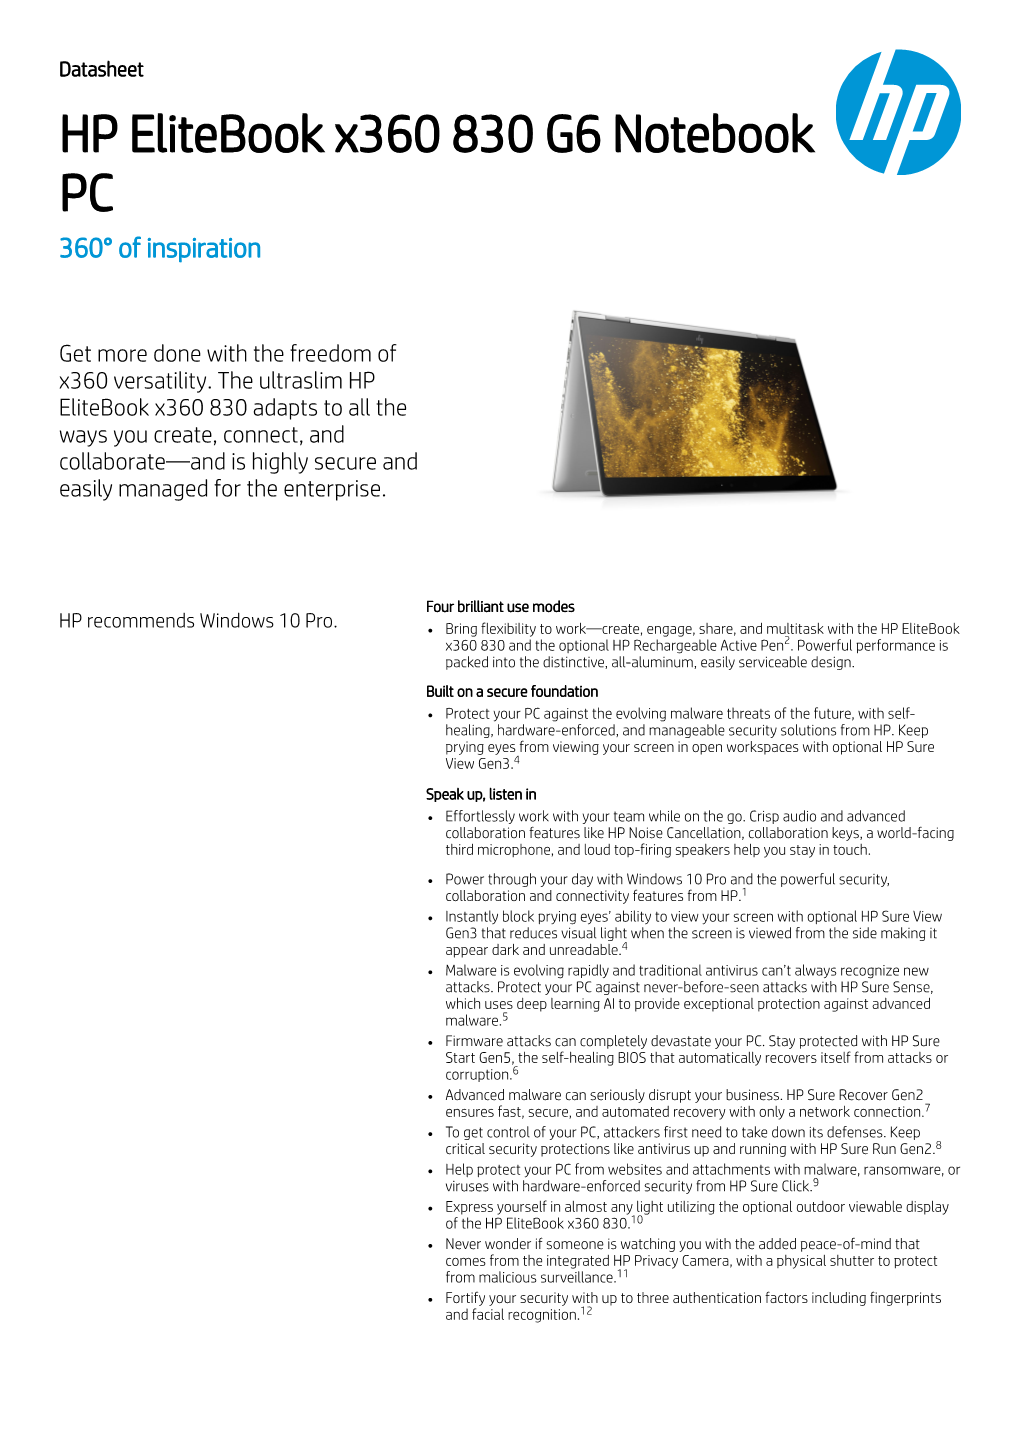 HP Elitebook X360 830 G6 Notebook PC 360° of Inspiration